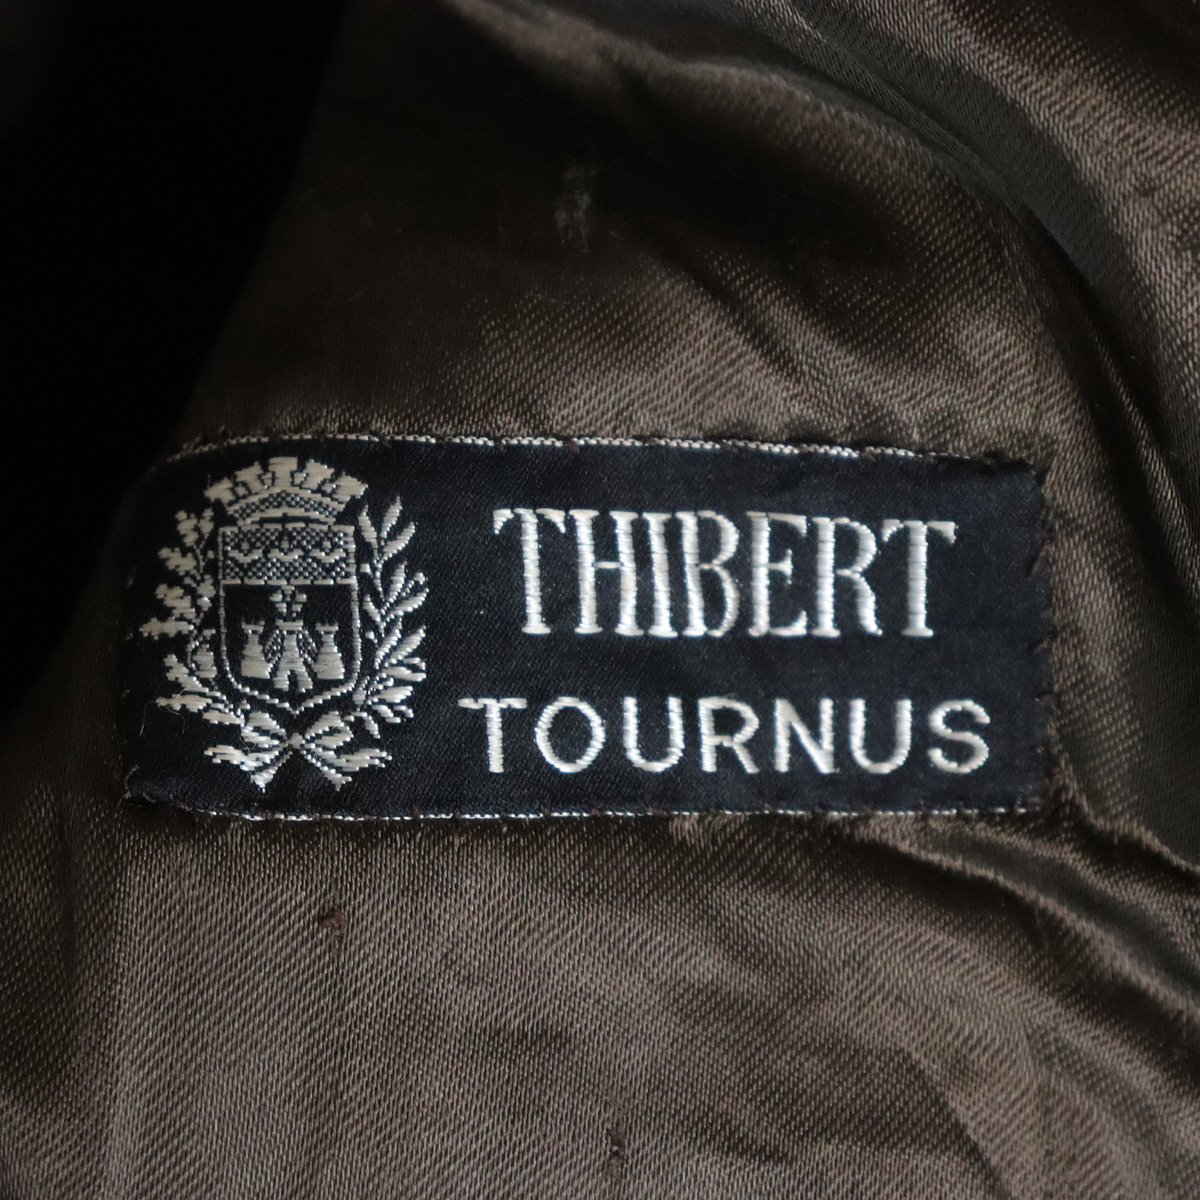 $4T/S3.20-3 France THIBERT TOURNUS leather car coat original leather double breast leather jacket leather jacket leather Jean 